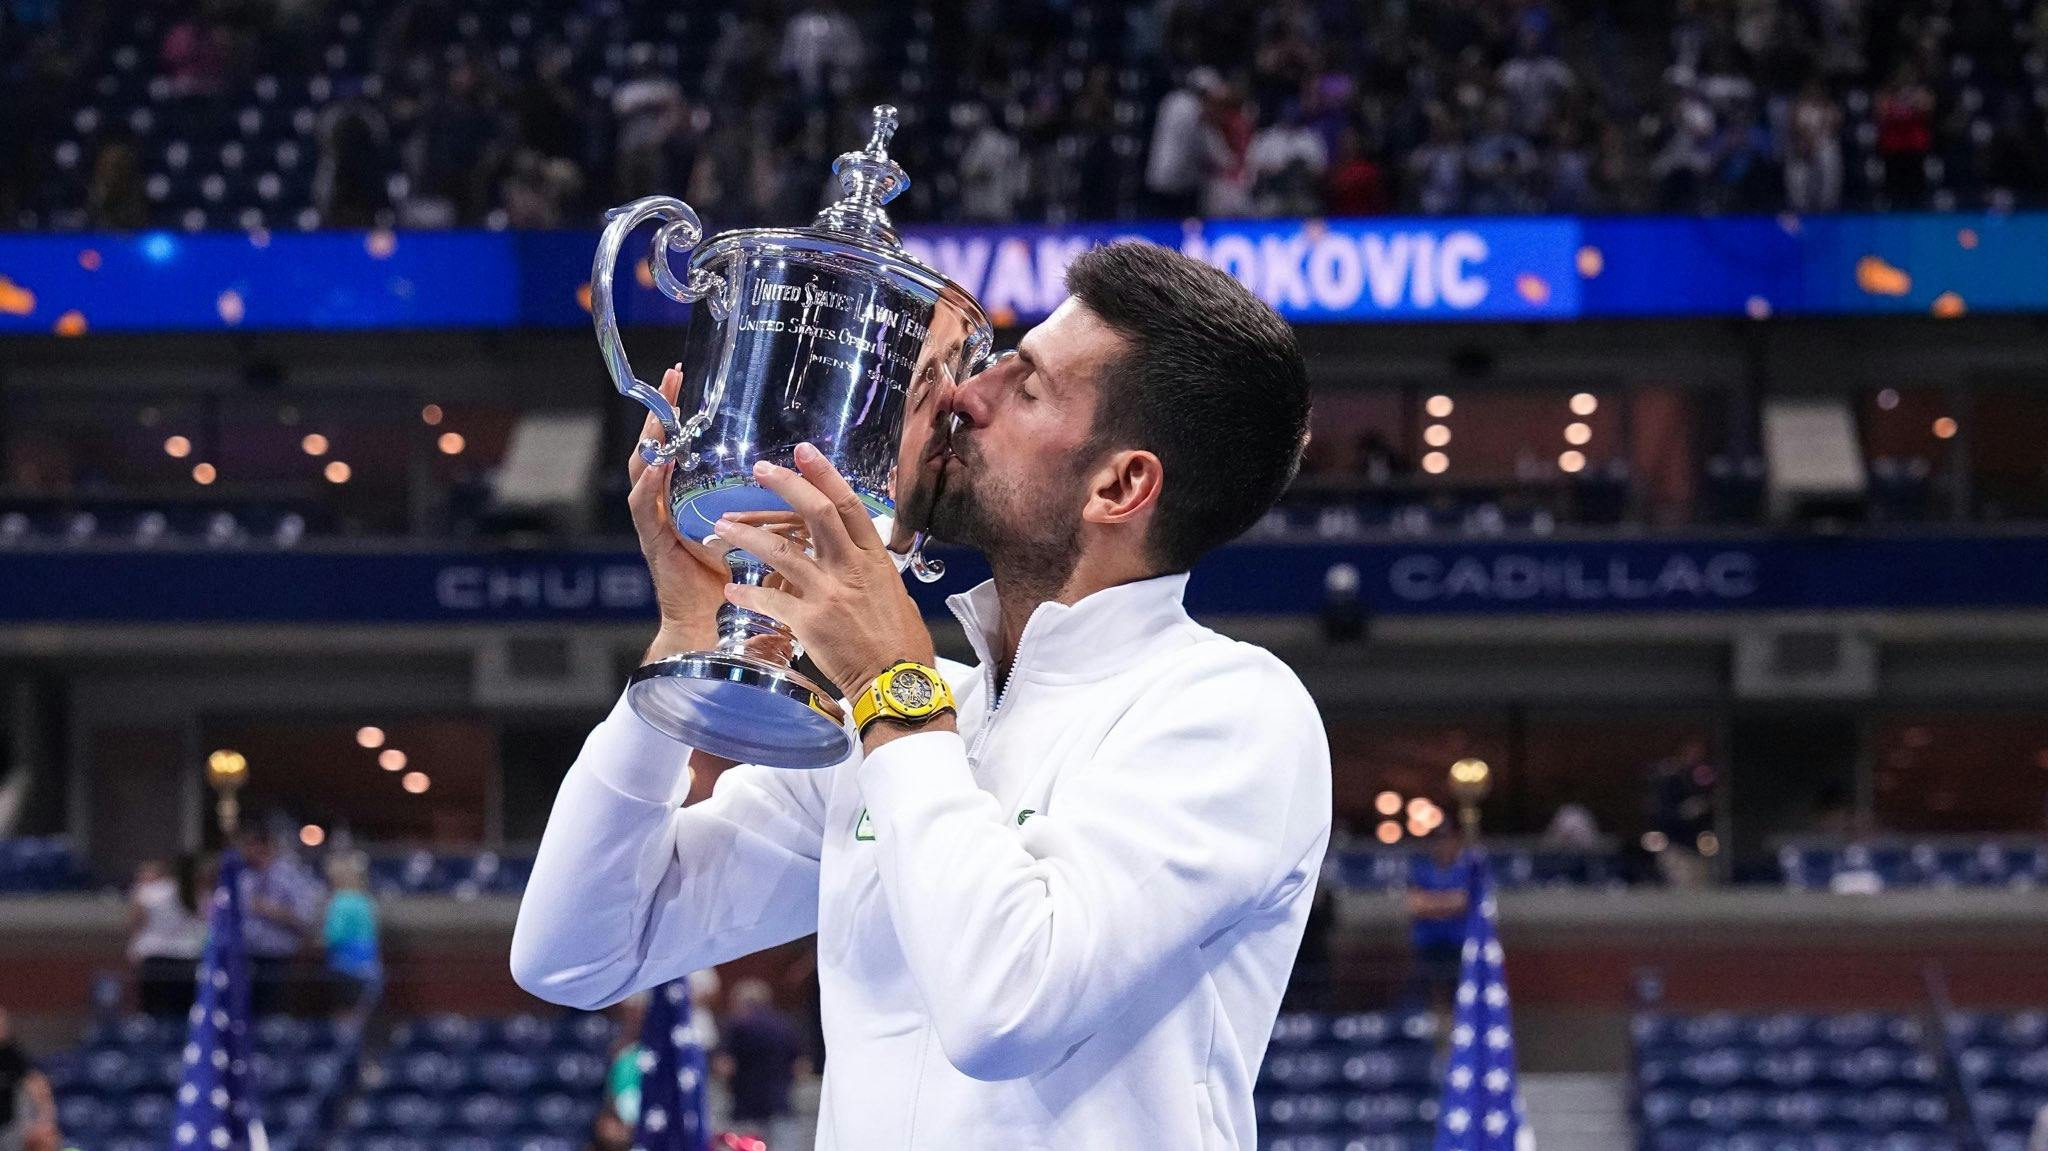 Novak Djokovic Wins the US Open